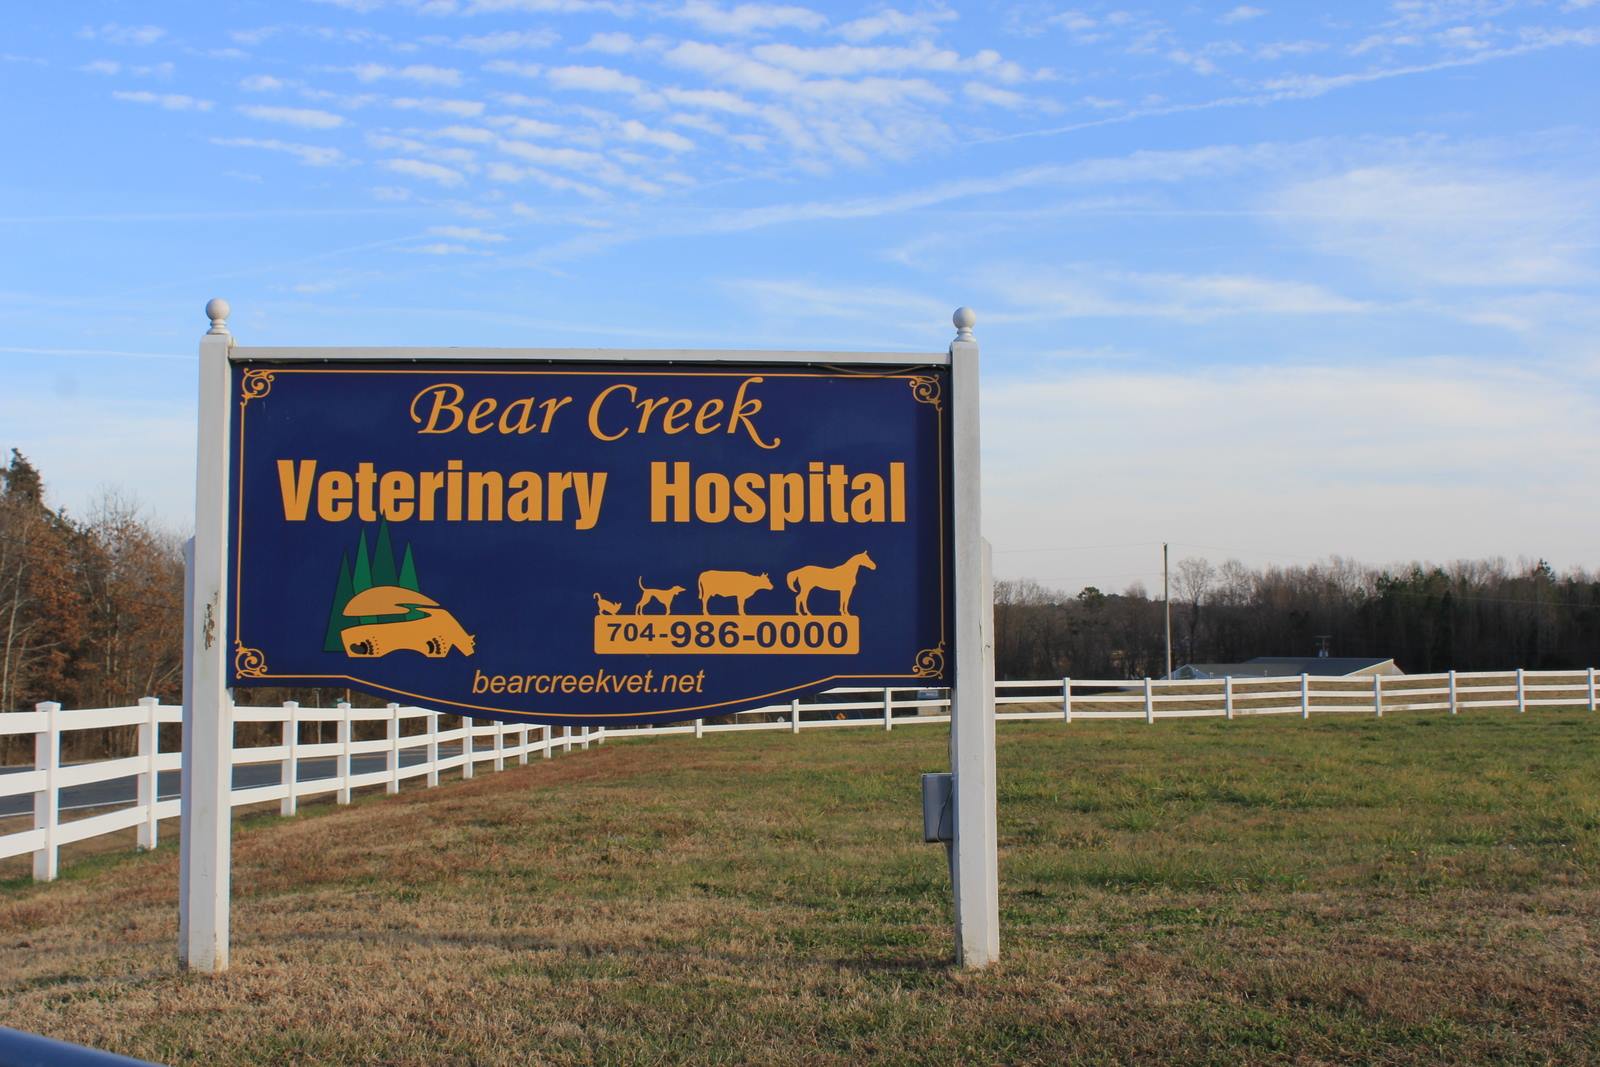 Bear Creek Veterinary Hospital